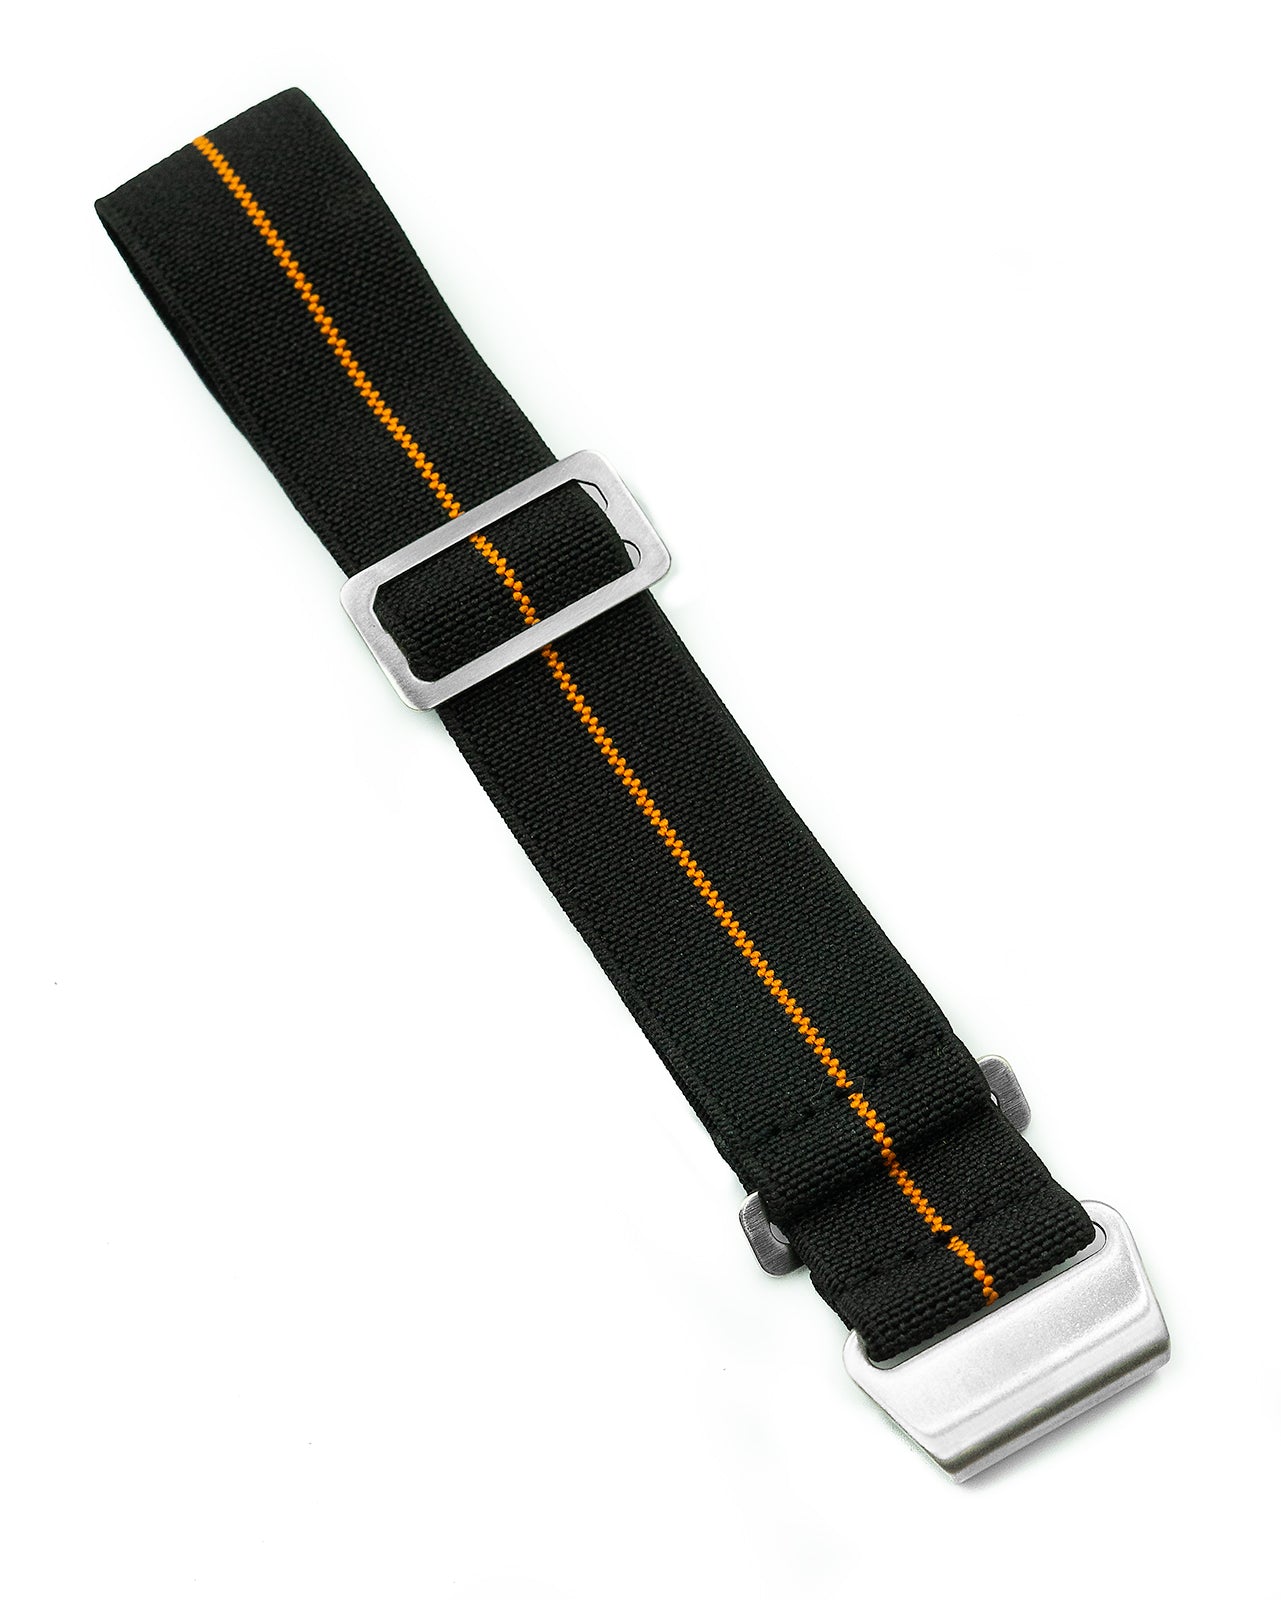 Striped Webbing Strap - Orange & Black Classic leather